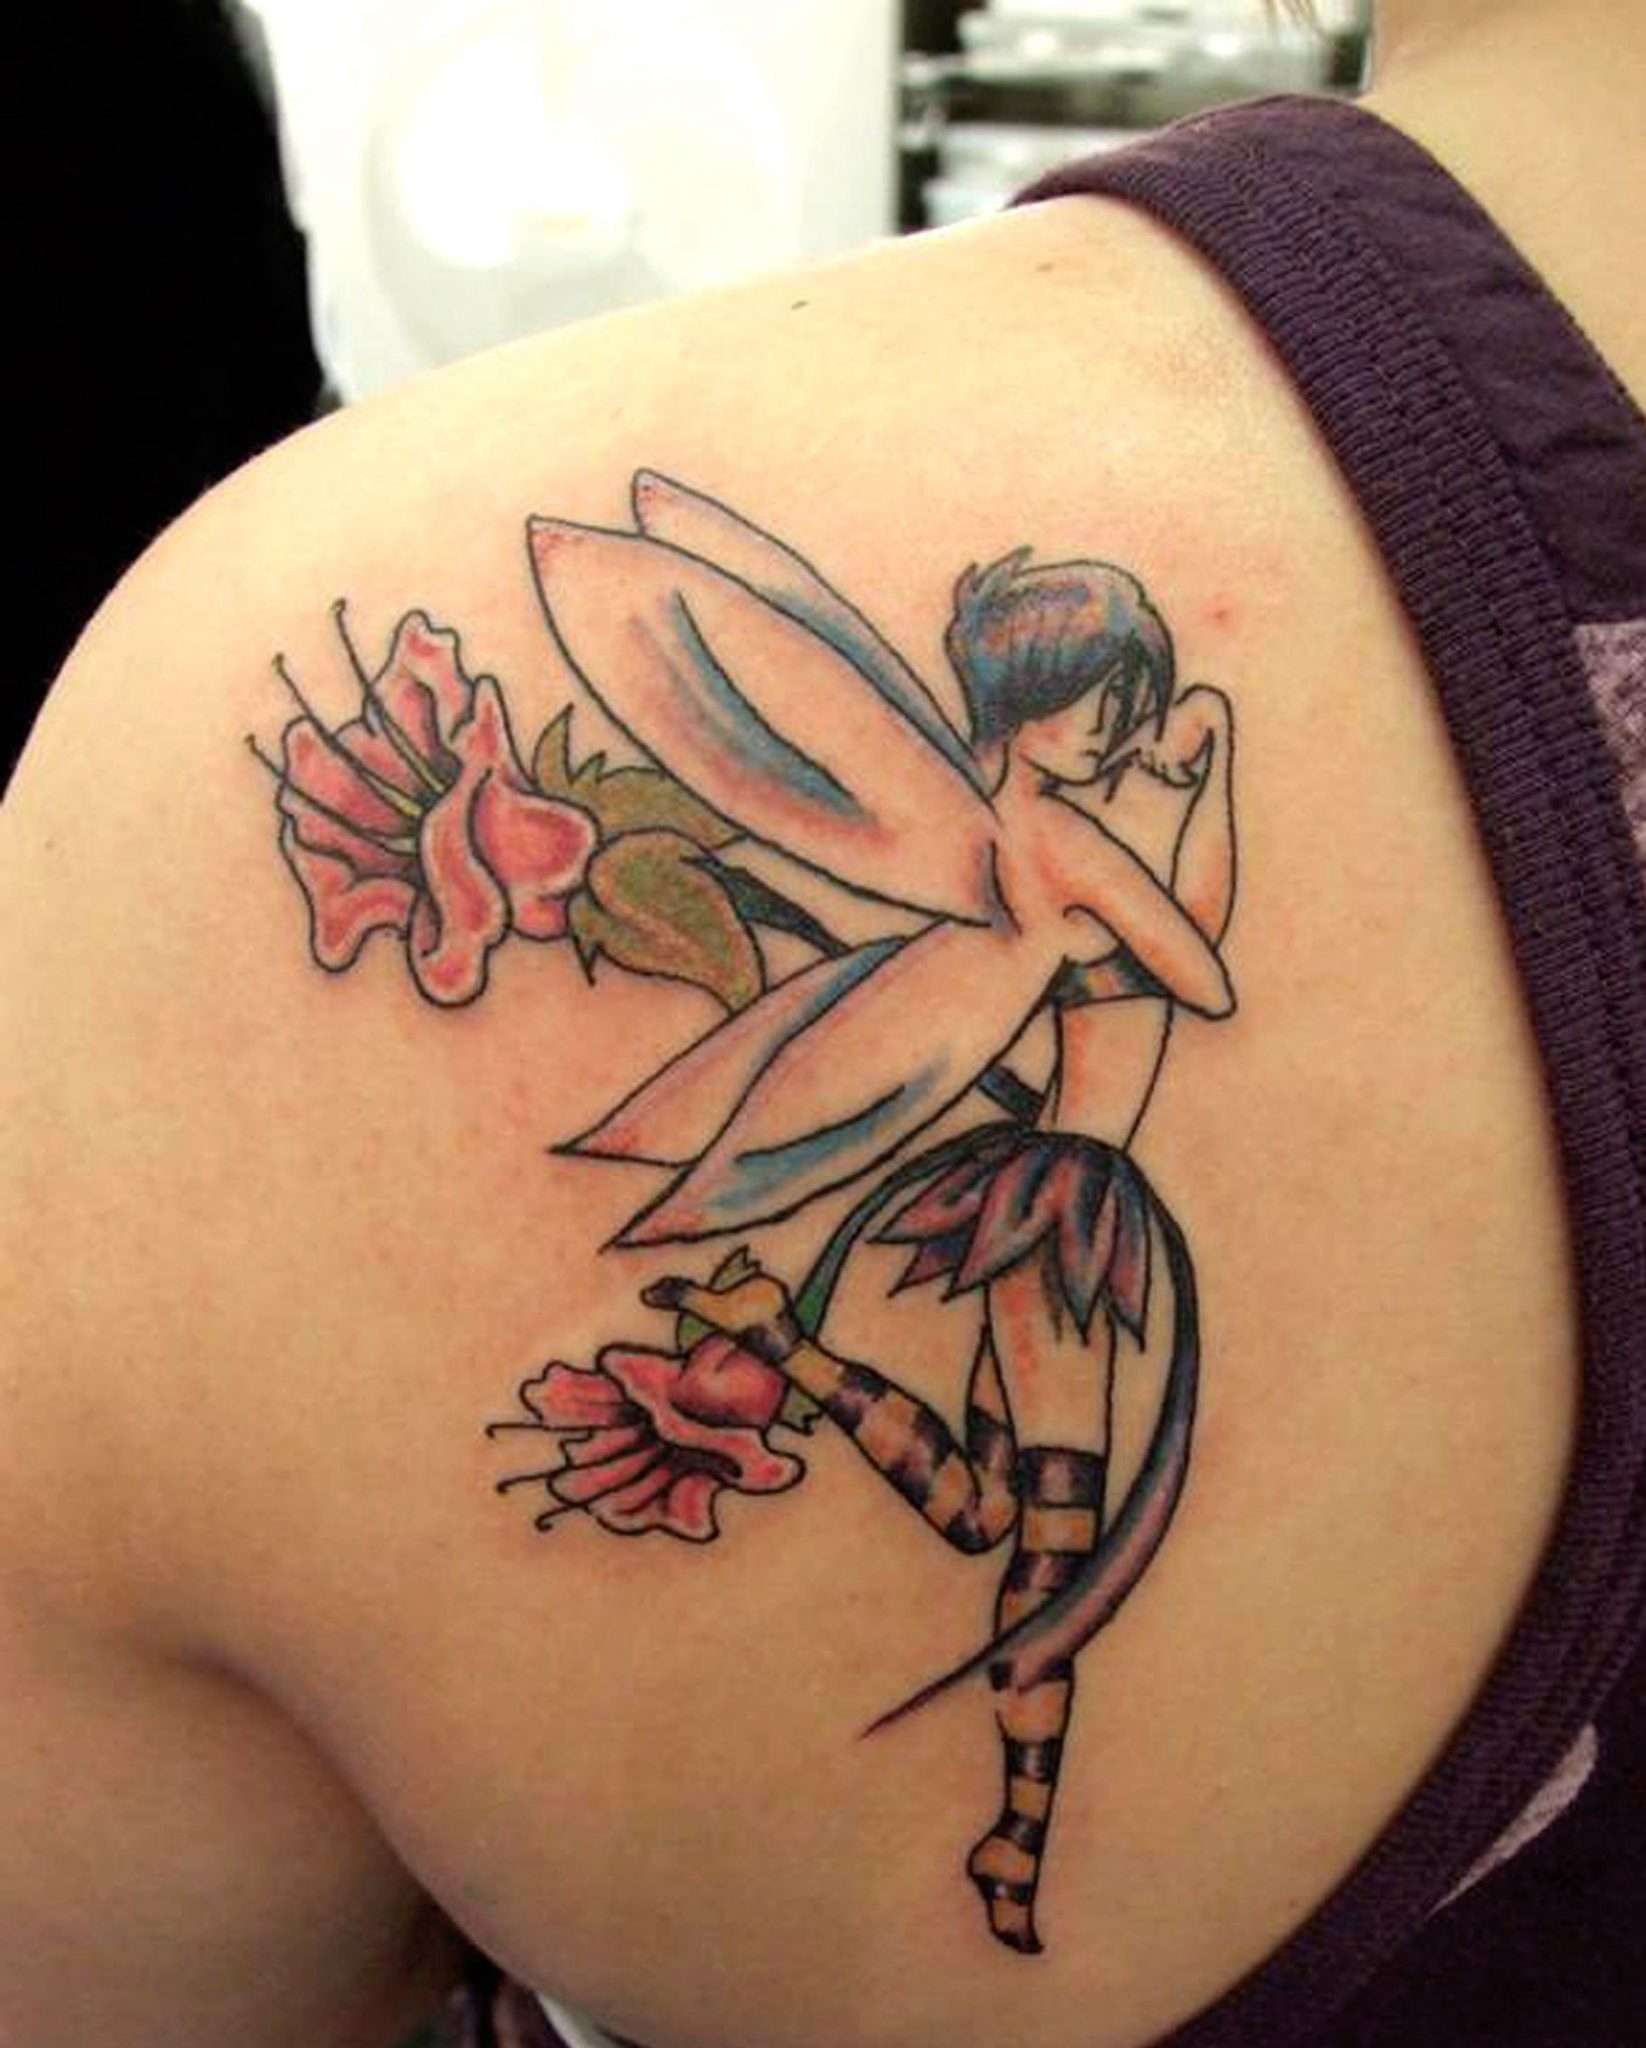 25 Best Butterfly Tattoo Designs For Girls regarding measurements 1646 X 2048